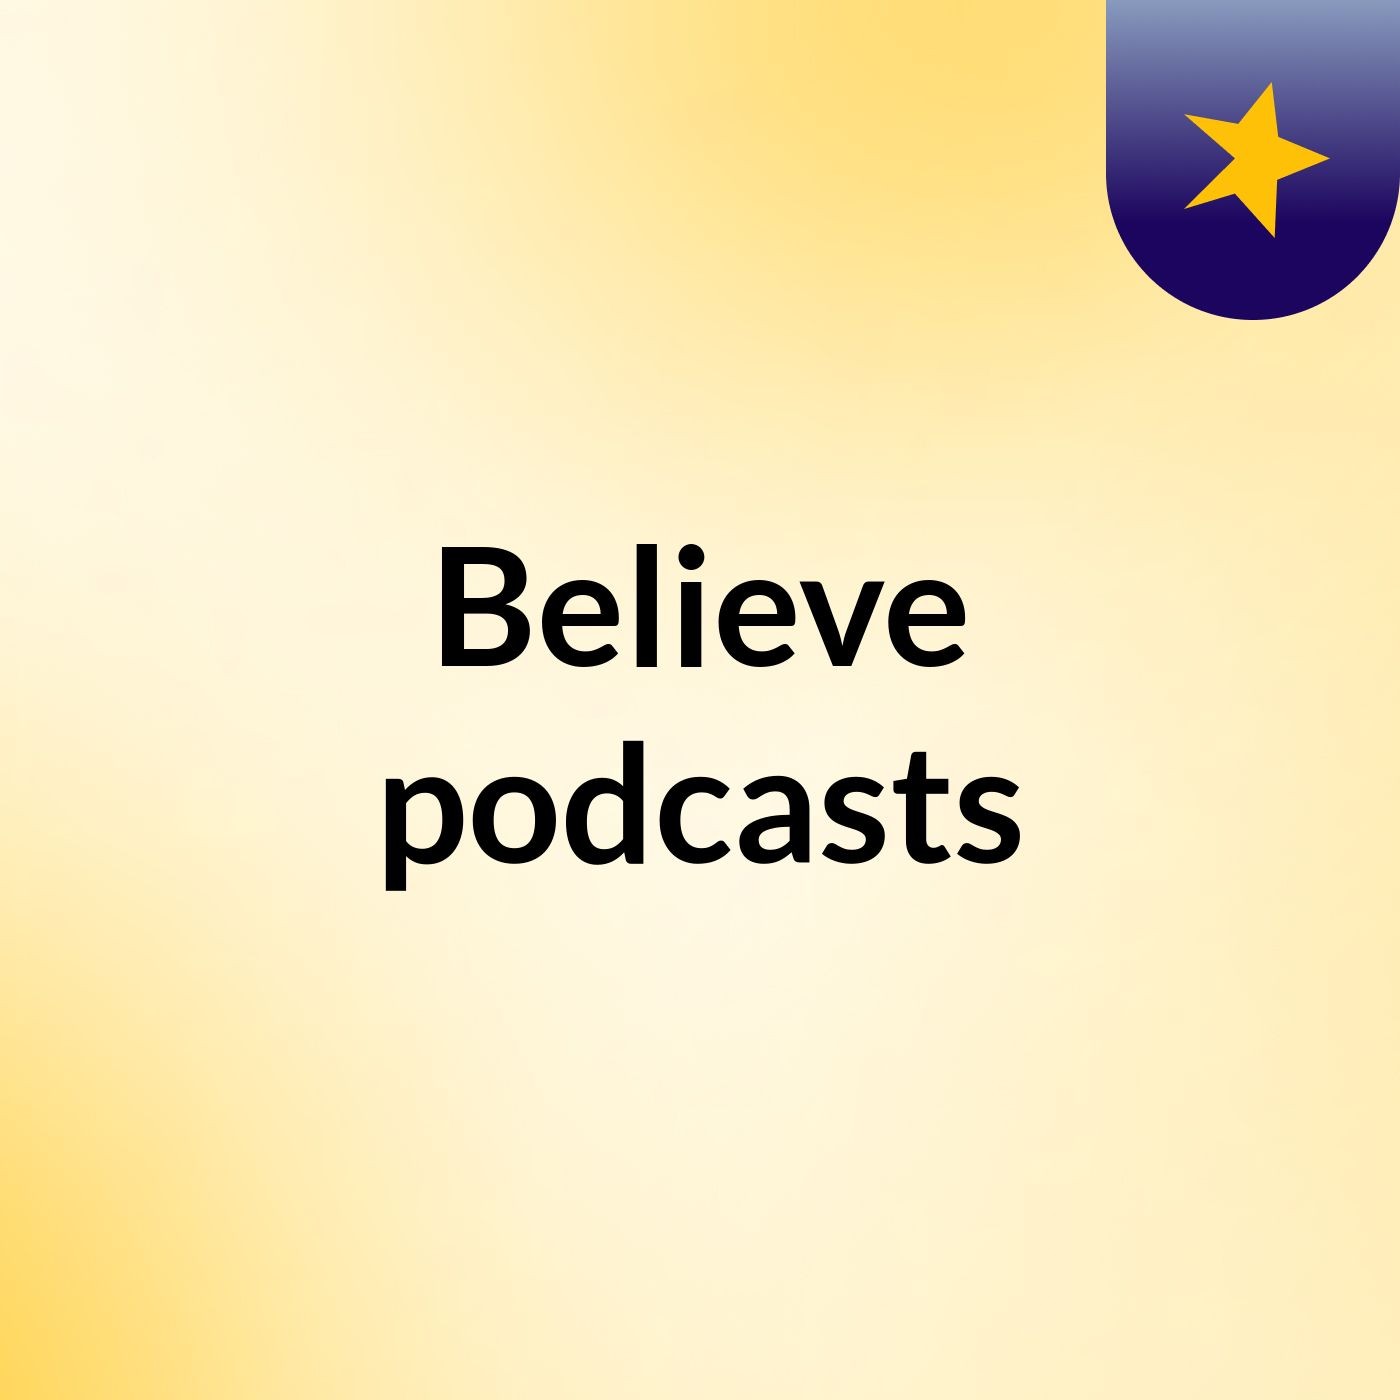 Believe podcasts